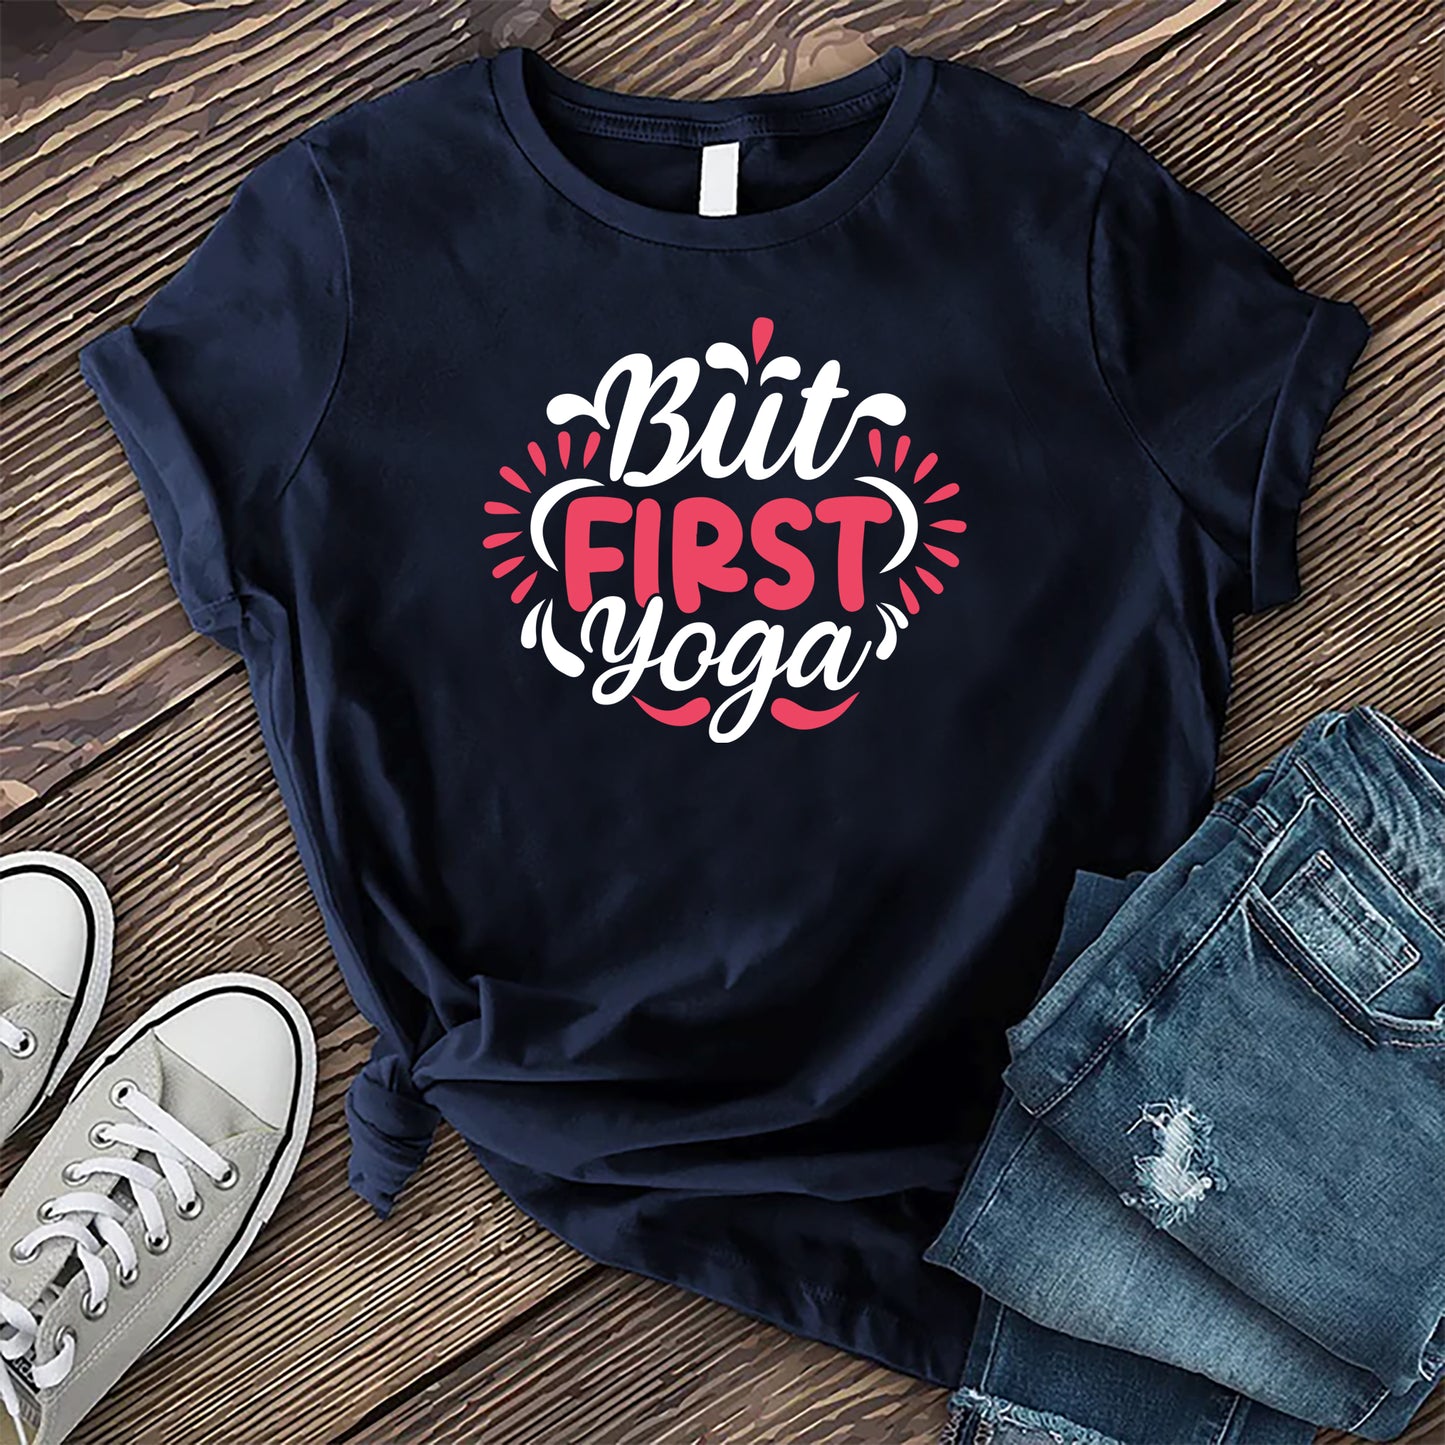 But First Yoga T-shirt